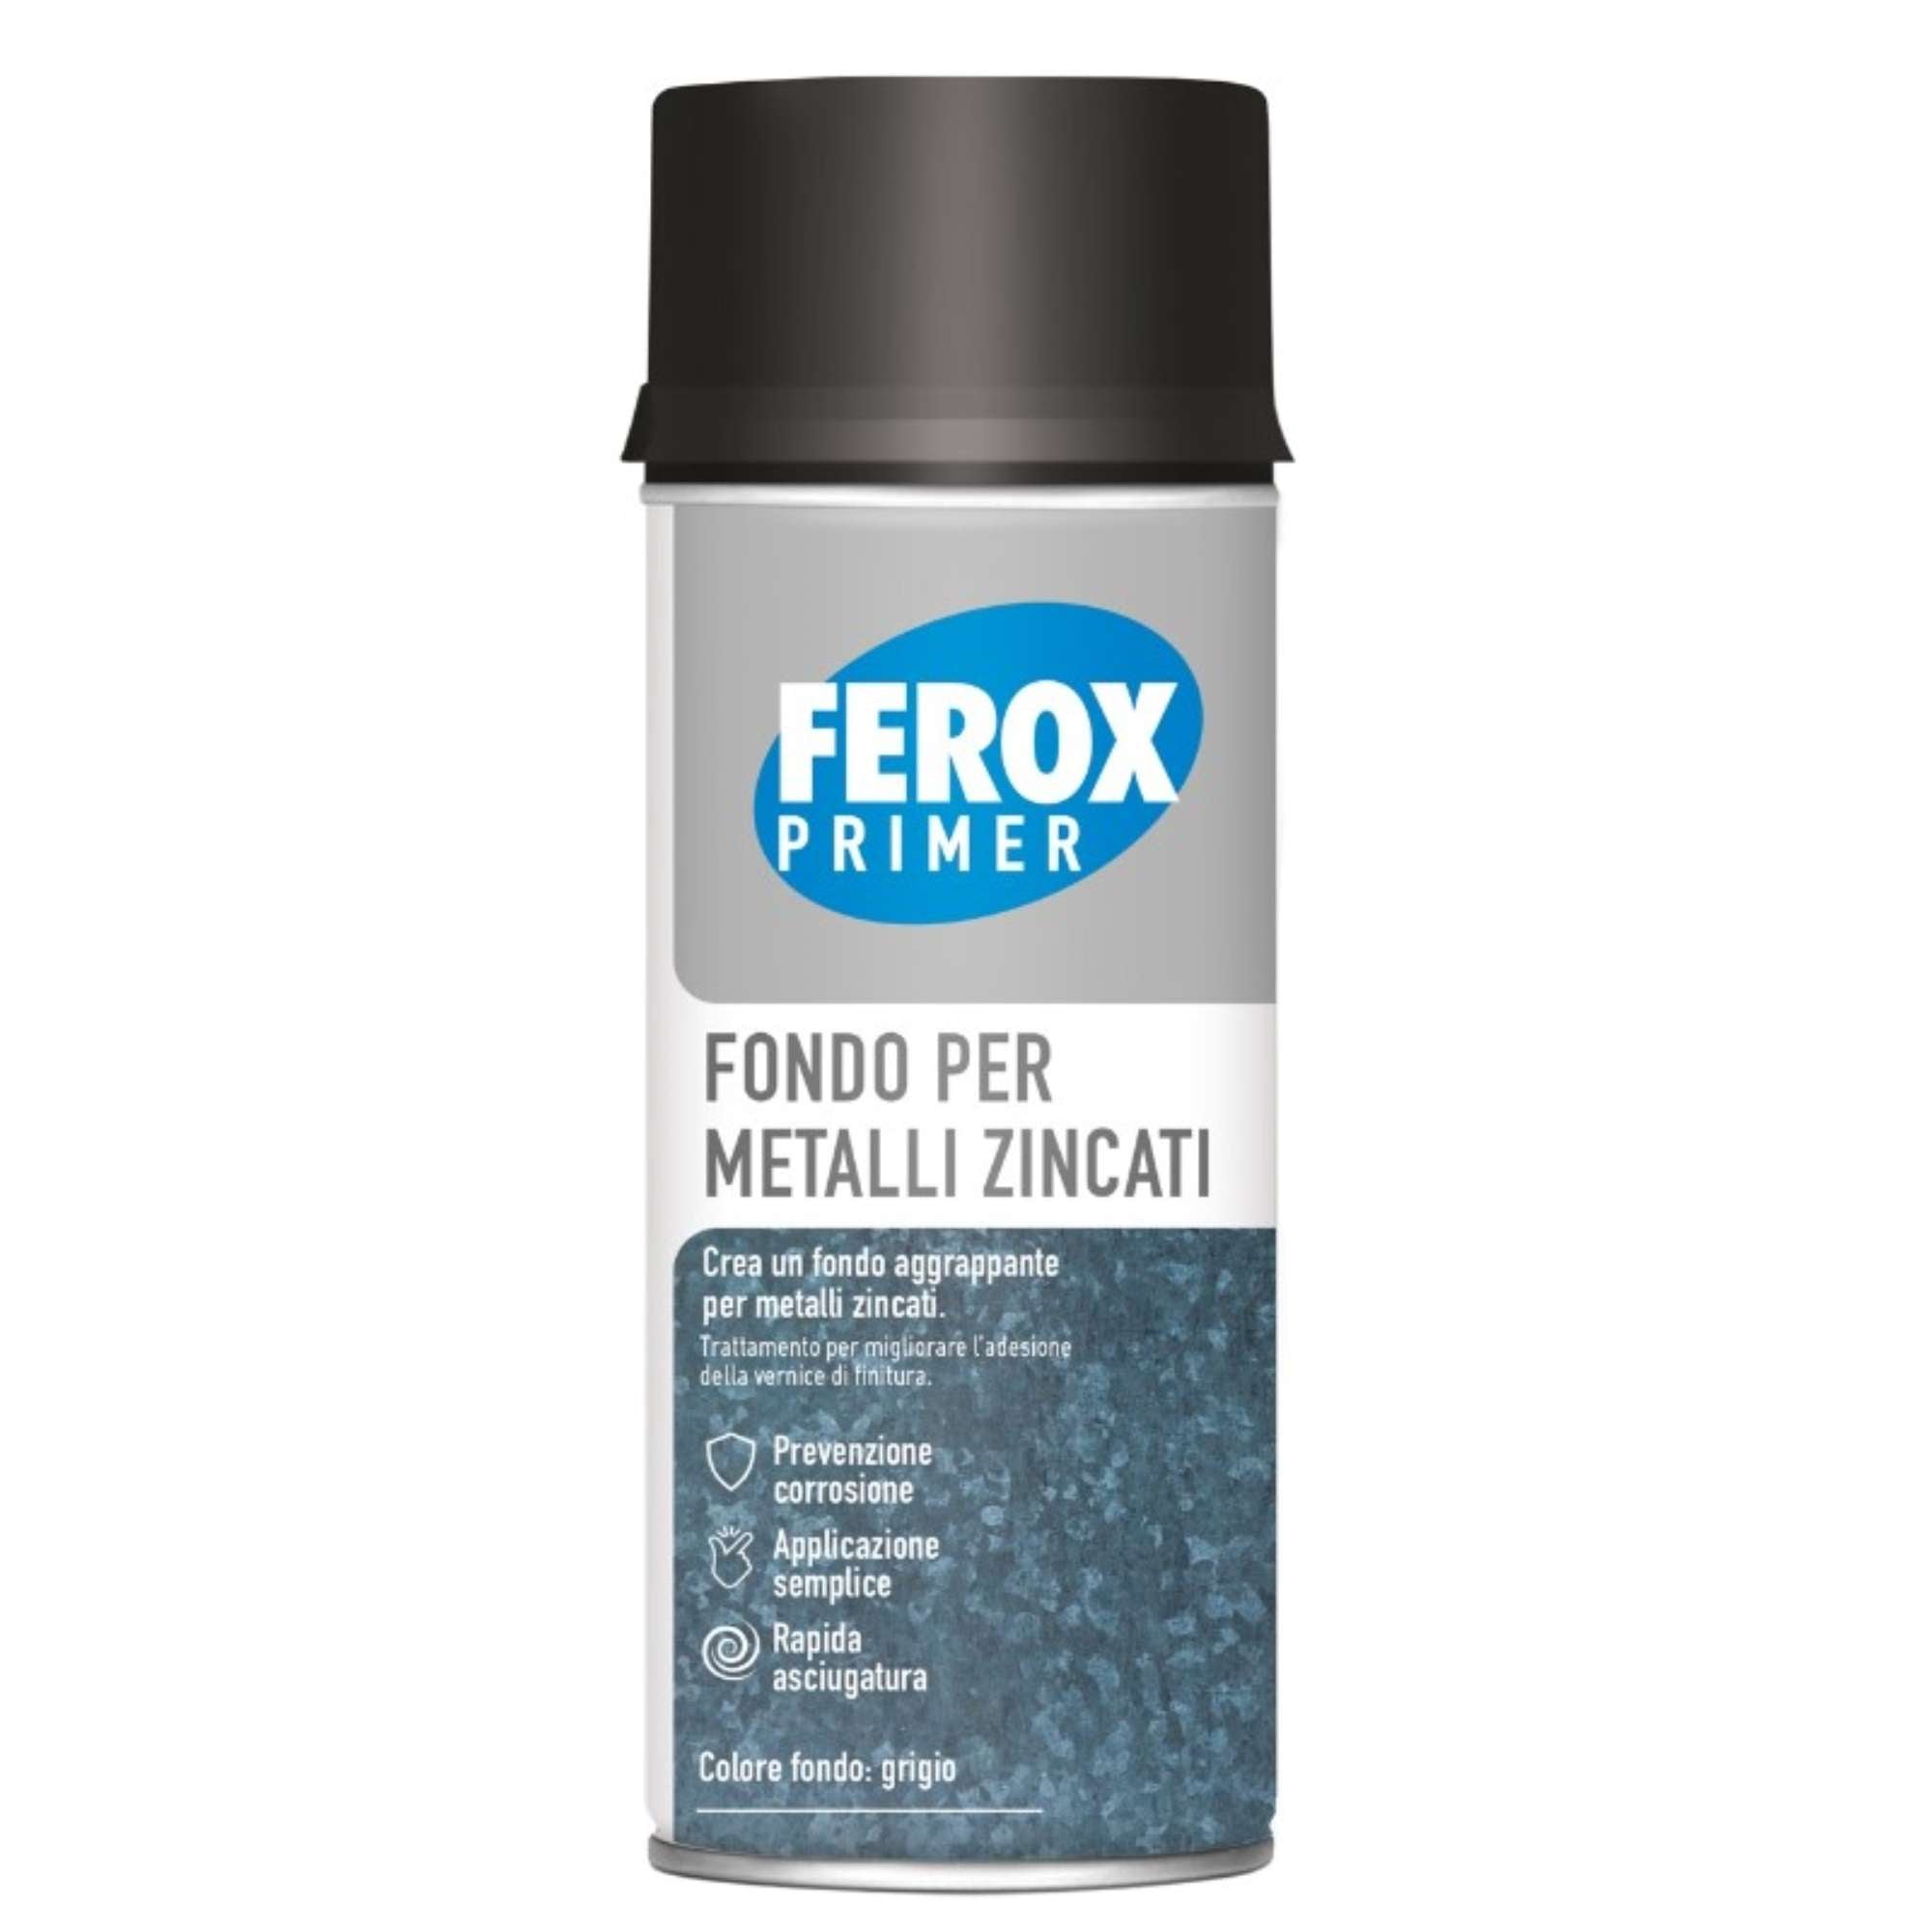 Ferox Fondo per metalli zincati 400ml - Arexons 2012